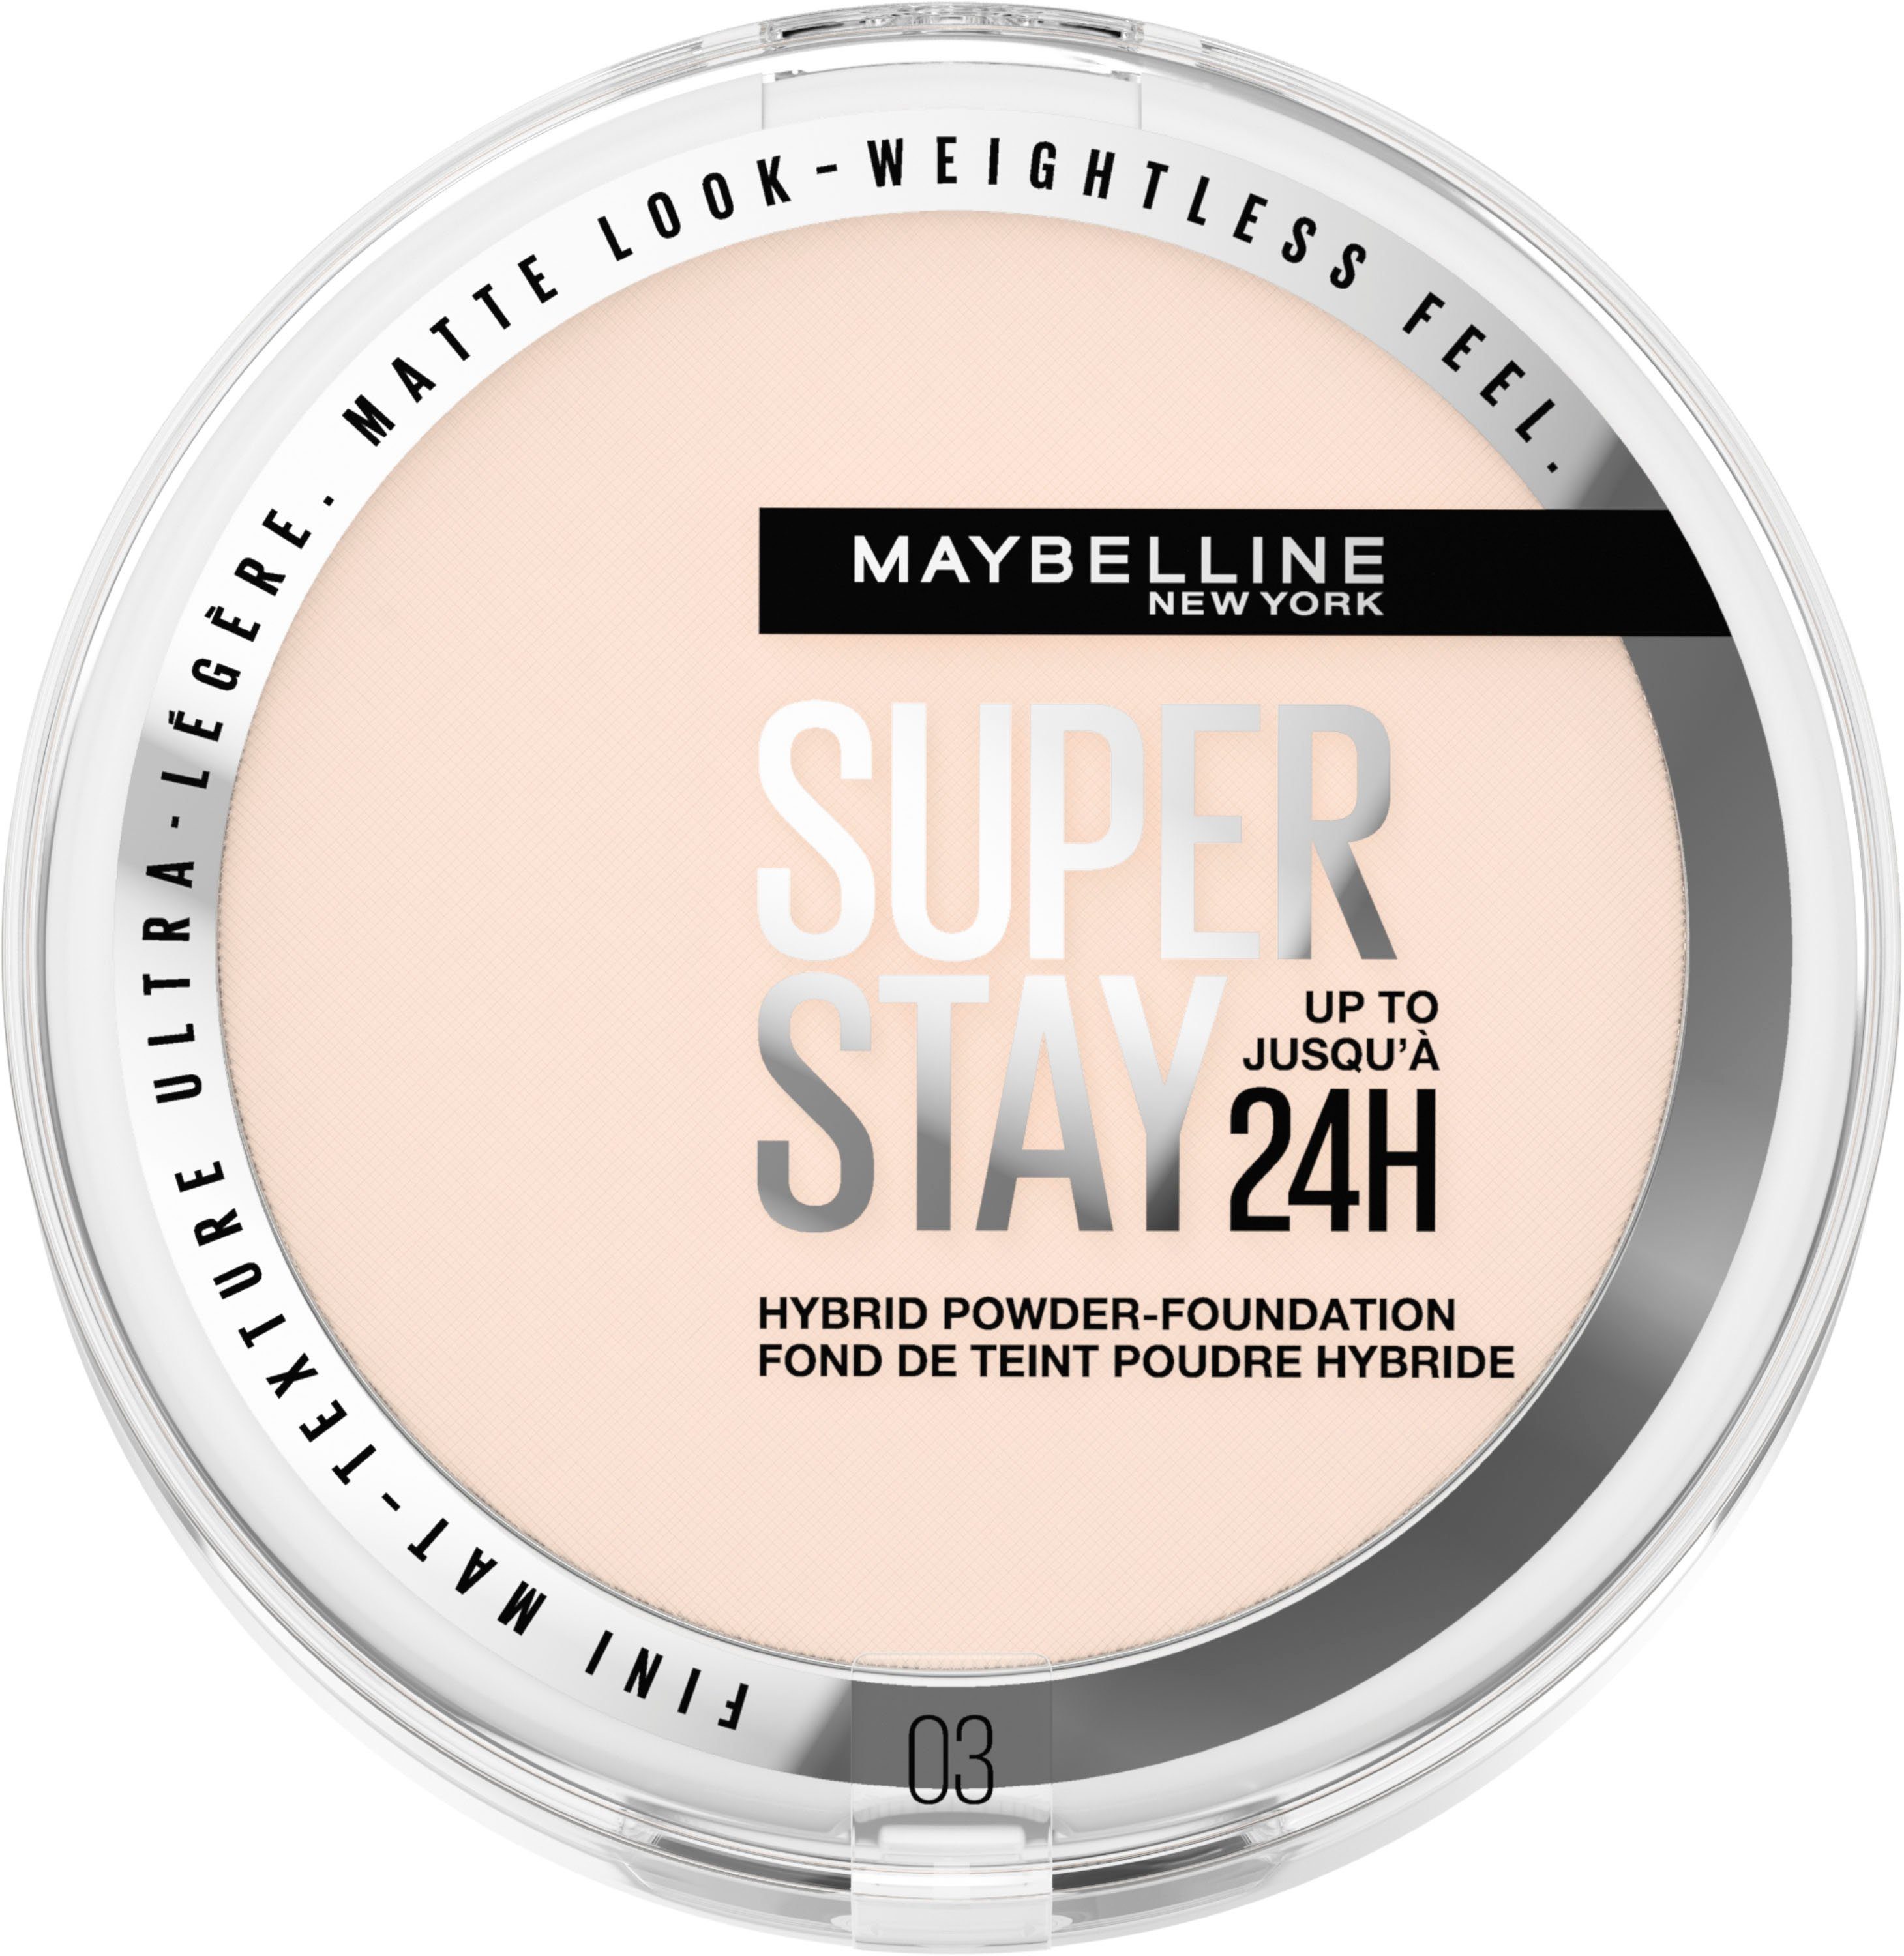 YORK Maybelline Hybrides Puder York Foundation New Stay NEW Make-Up Super MAYBELLINE